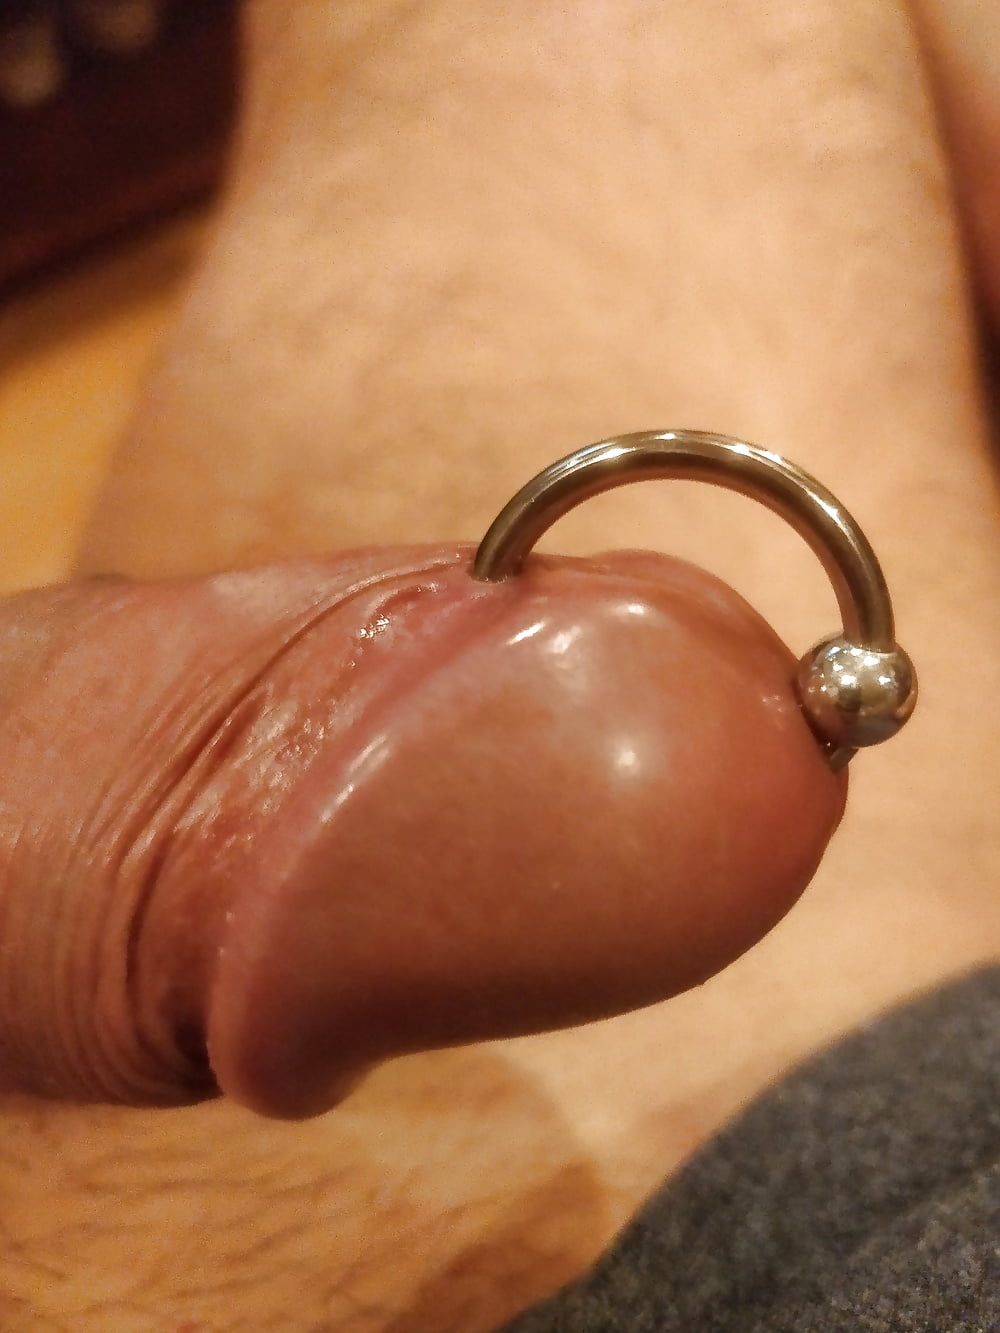 кольцо на члене порно онлайн фото 114